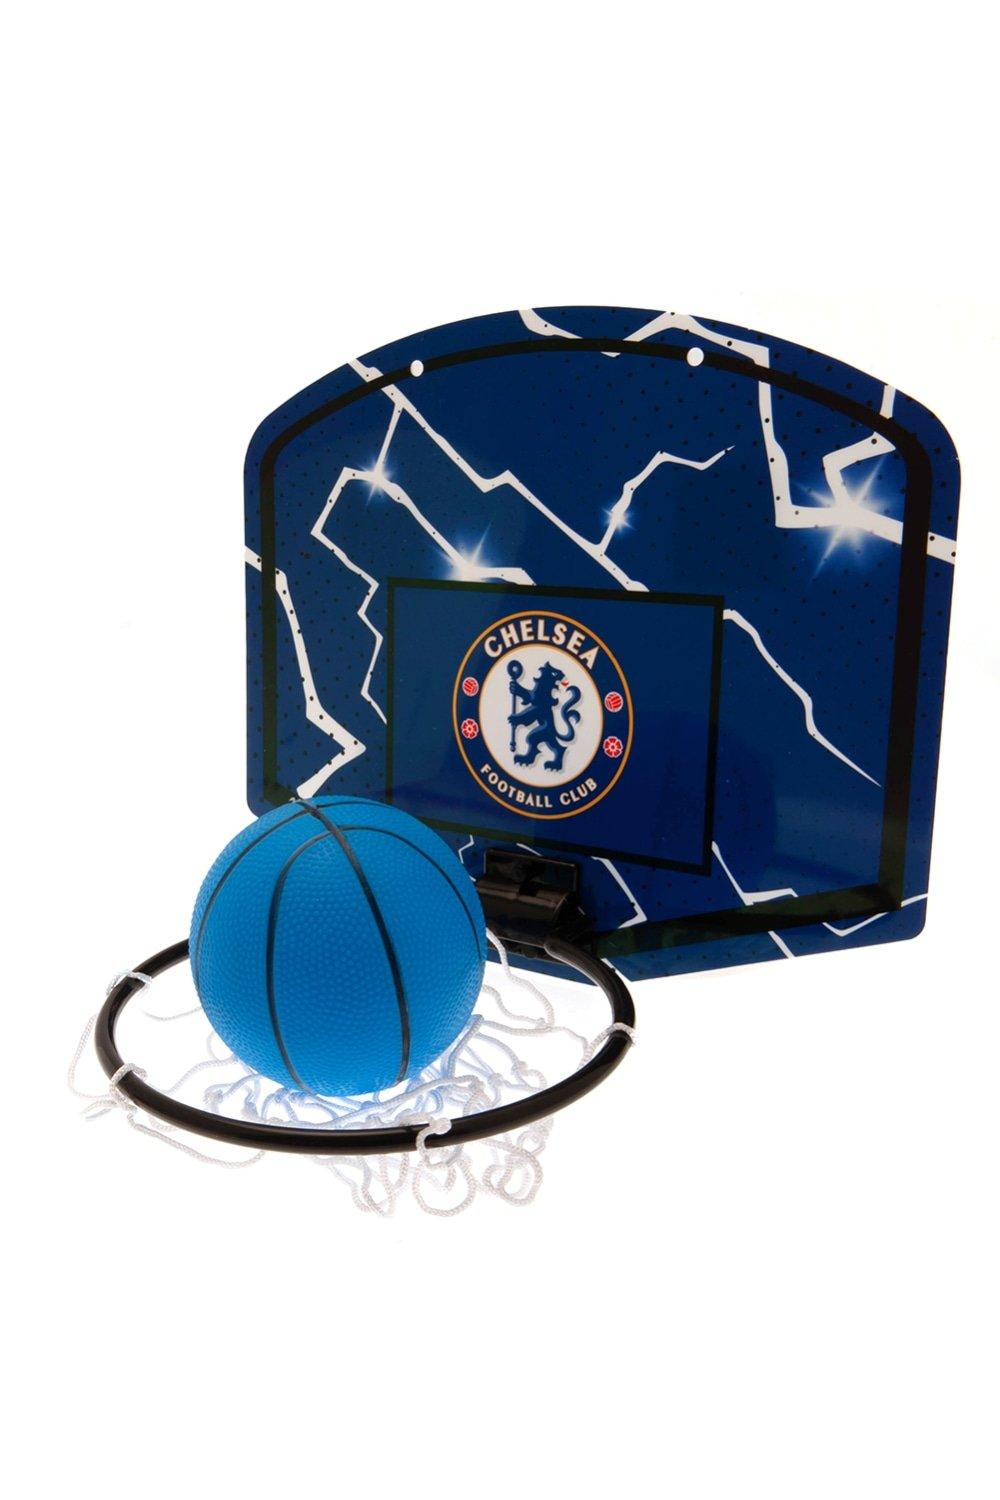 Crest Mini Basketball Hoop Set